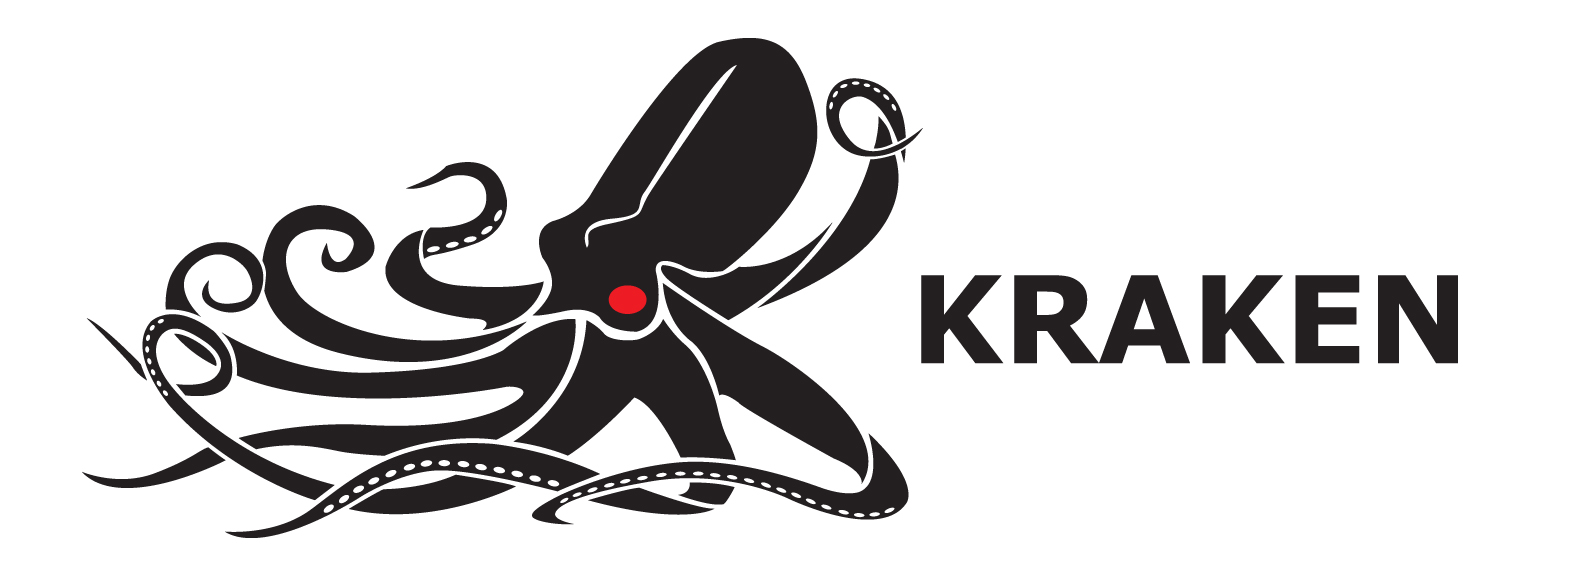 Kraken Robotic Systems, Inc.